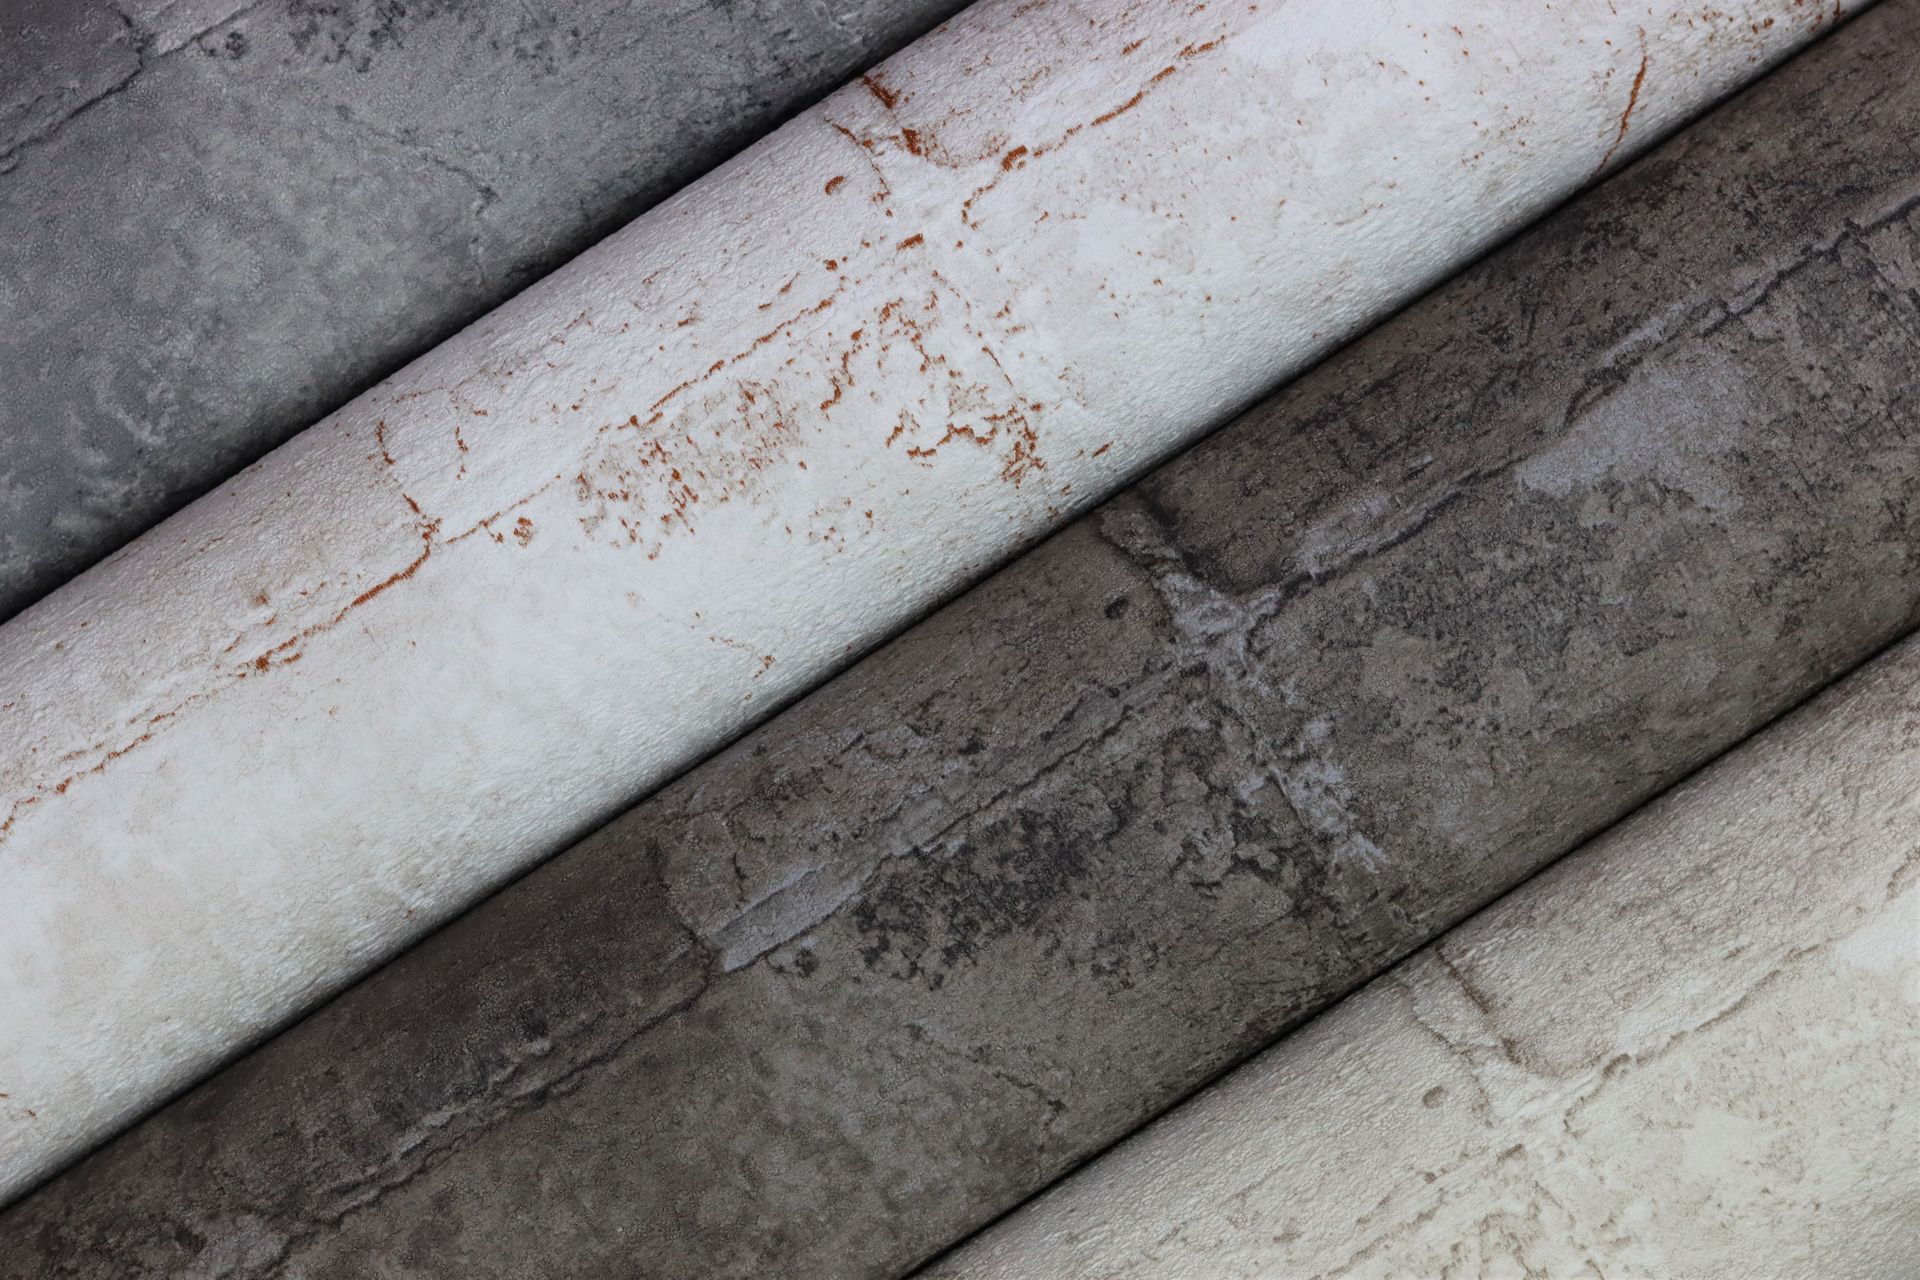 Rasch Concrete, Industrial, beige grau 520132